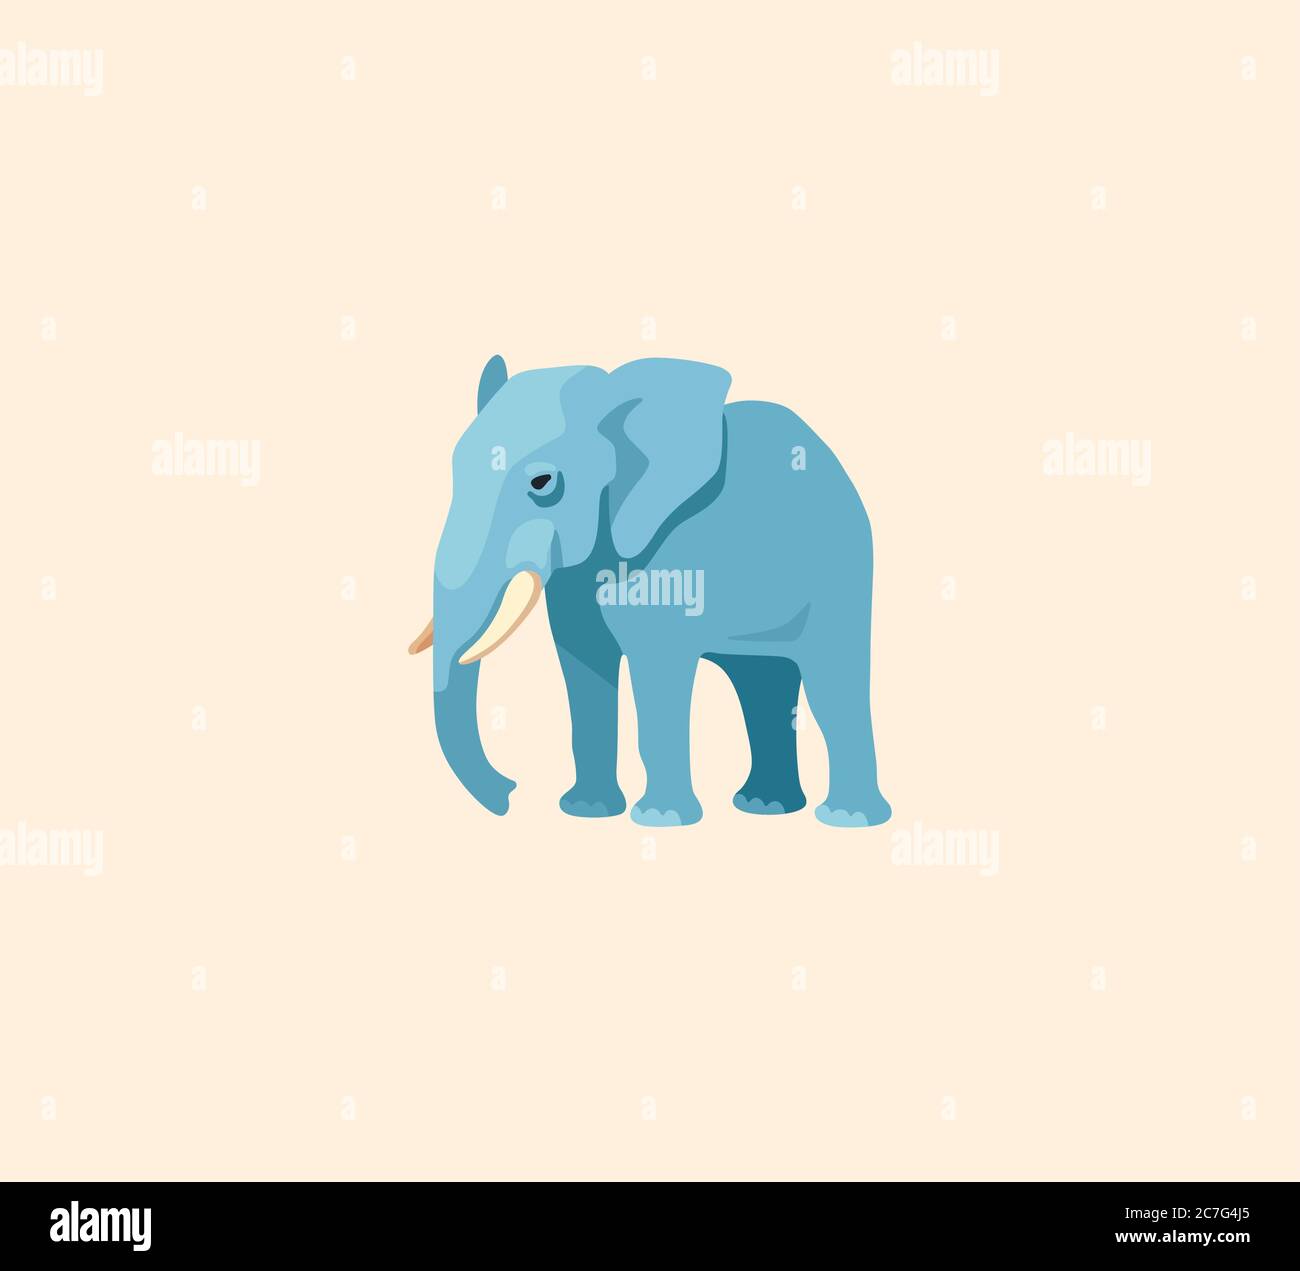 Elephant vector isolated illustration. Elephant icon Stock Vector